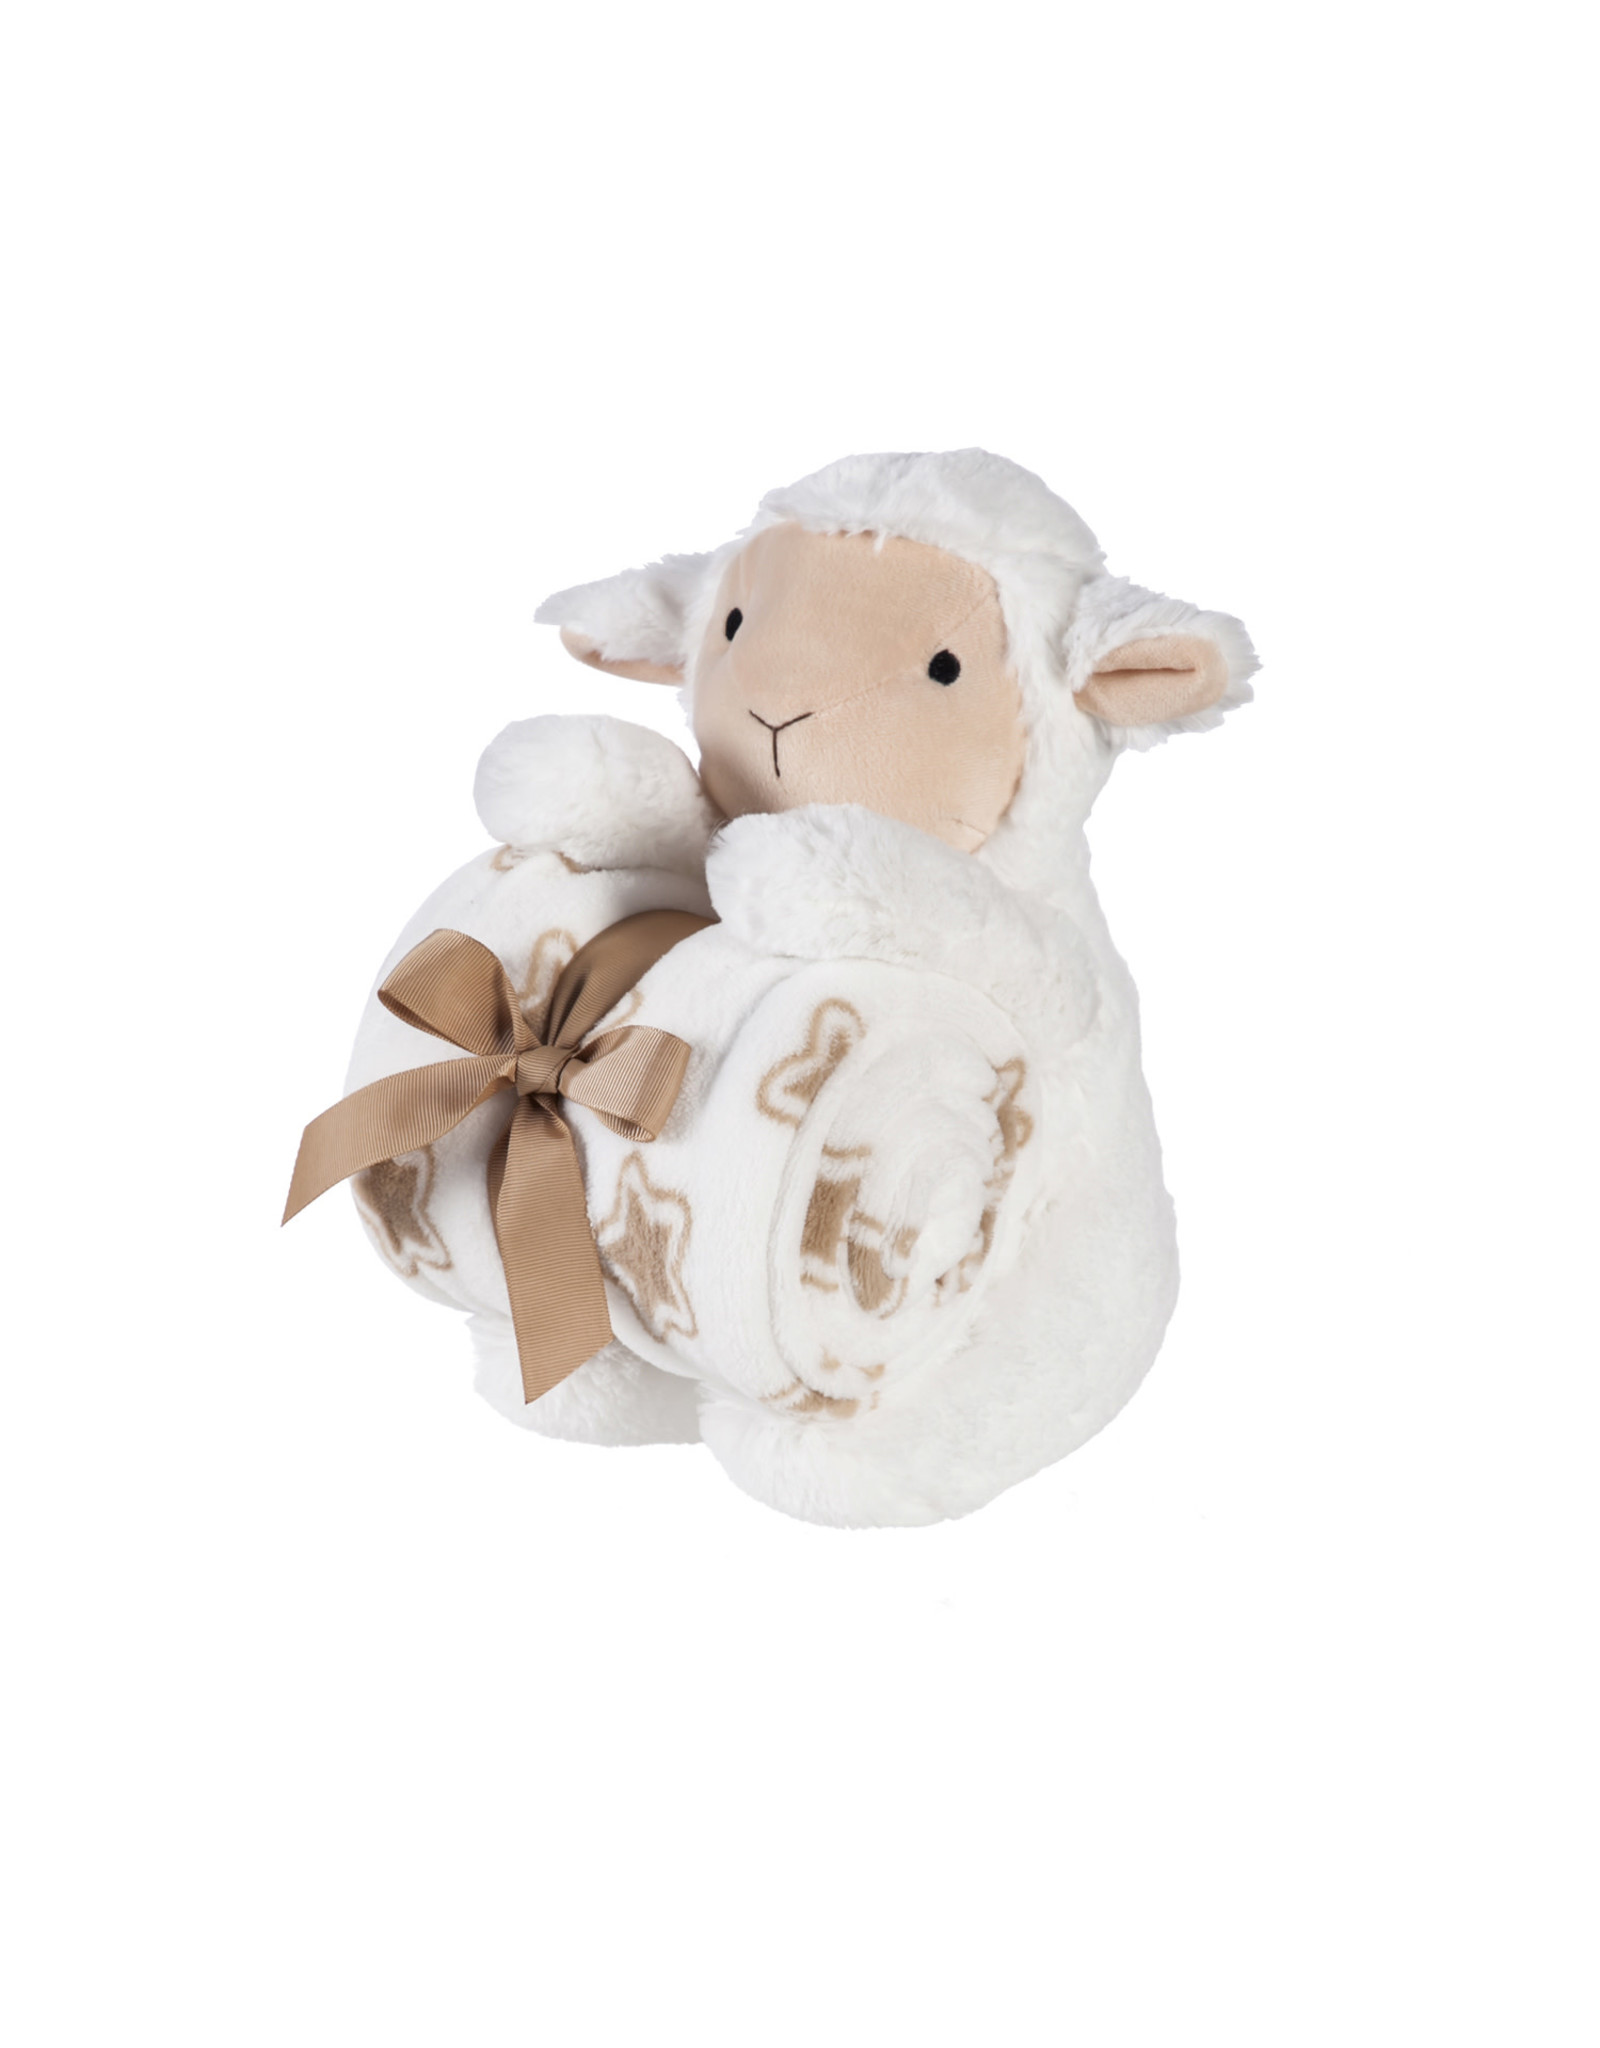 Evergreen Enterprises Cuddly Lamb 10" Stuffed Animal w/ Blanket Gift Set, Cream